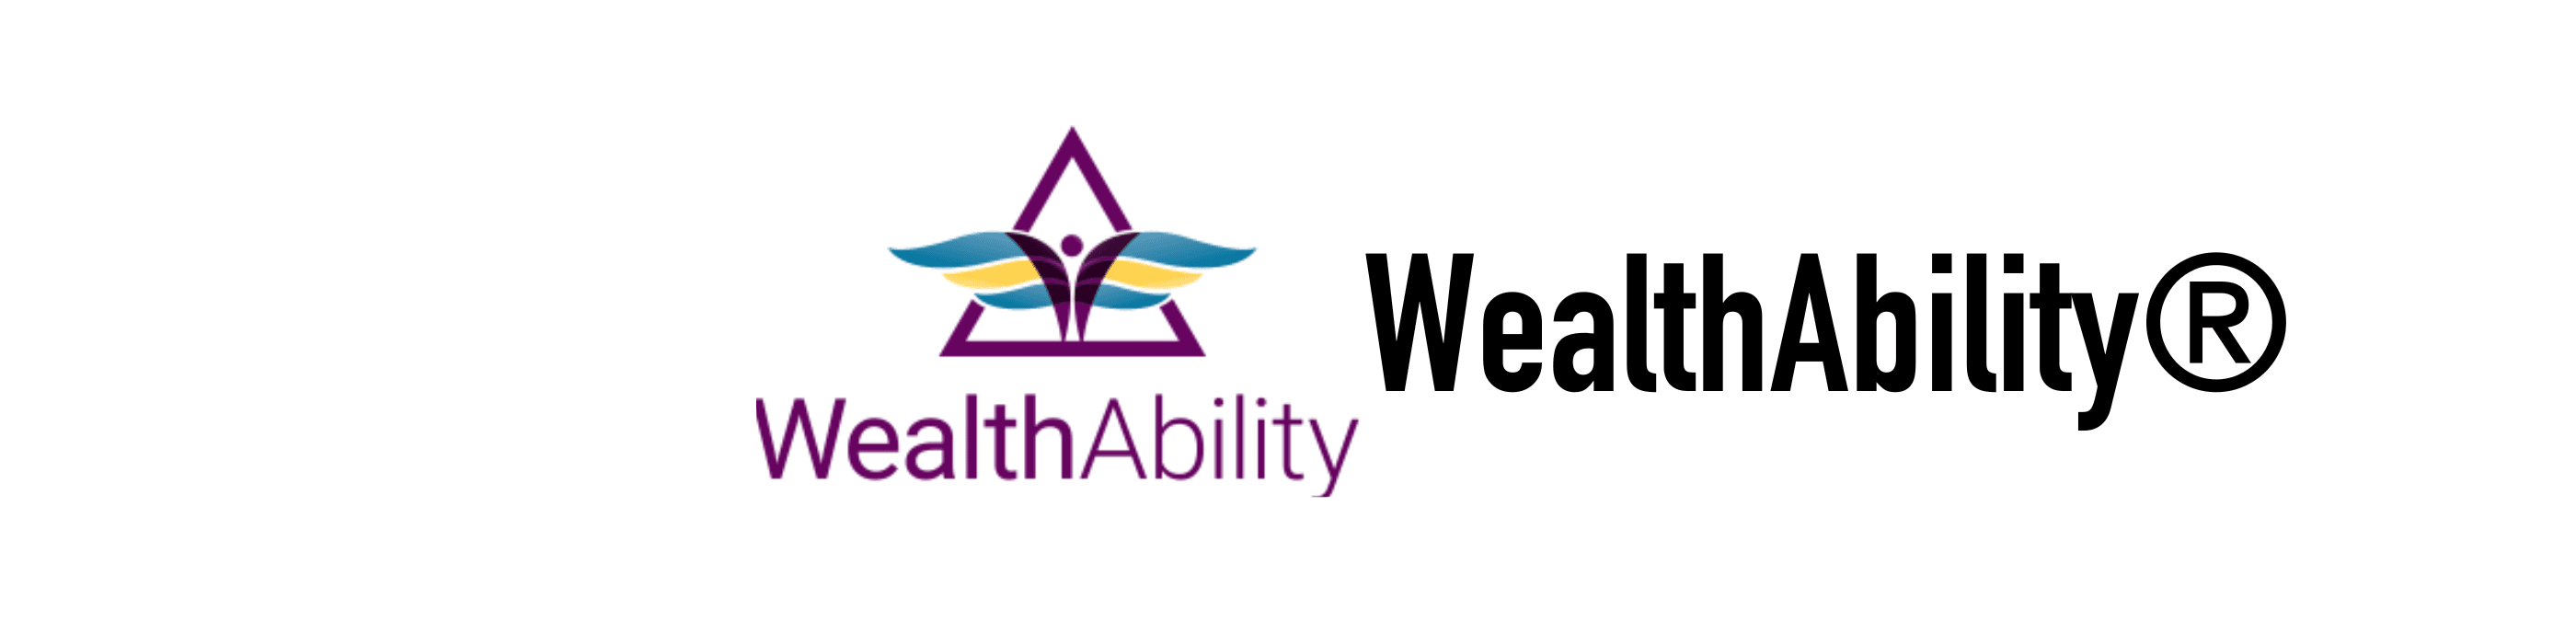 WealthAbility banner